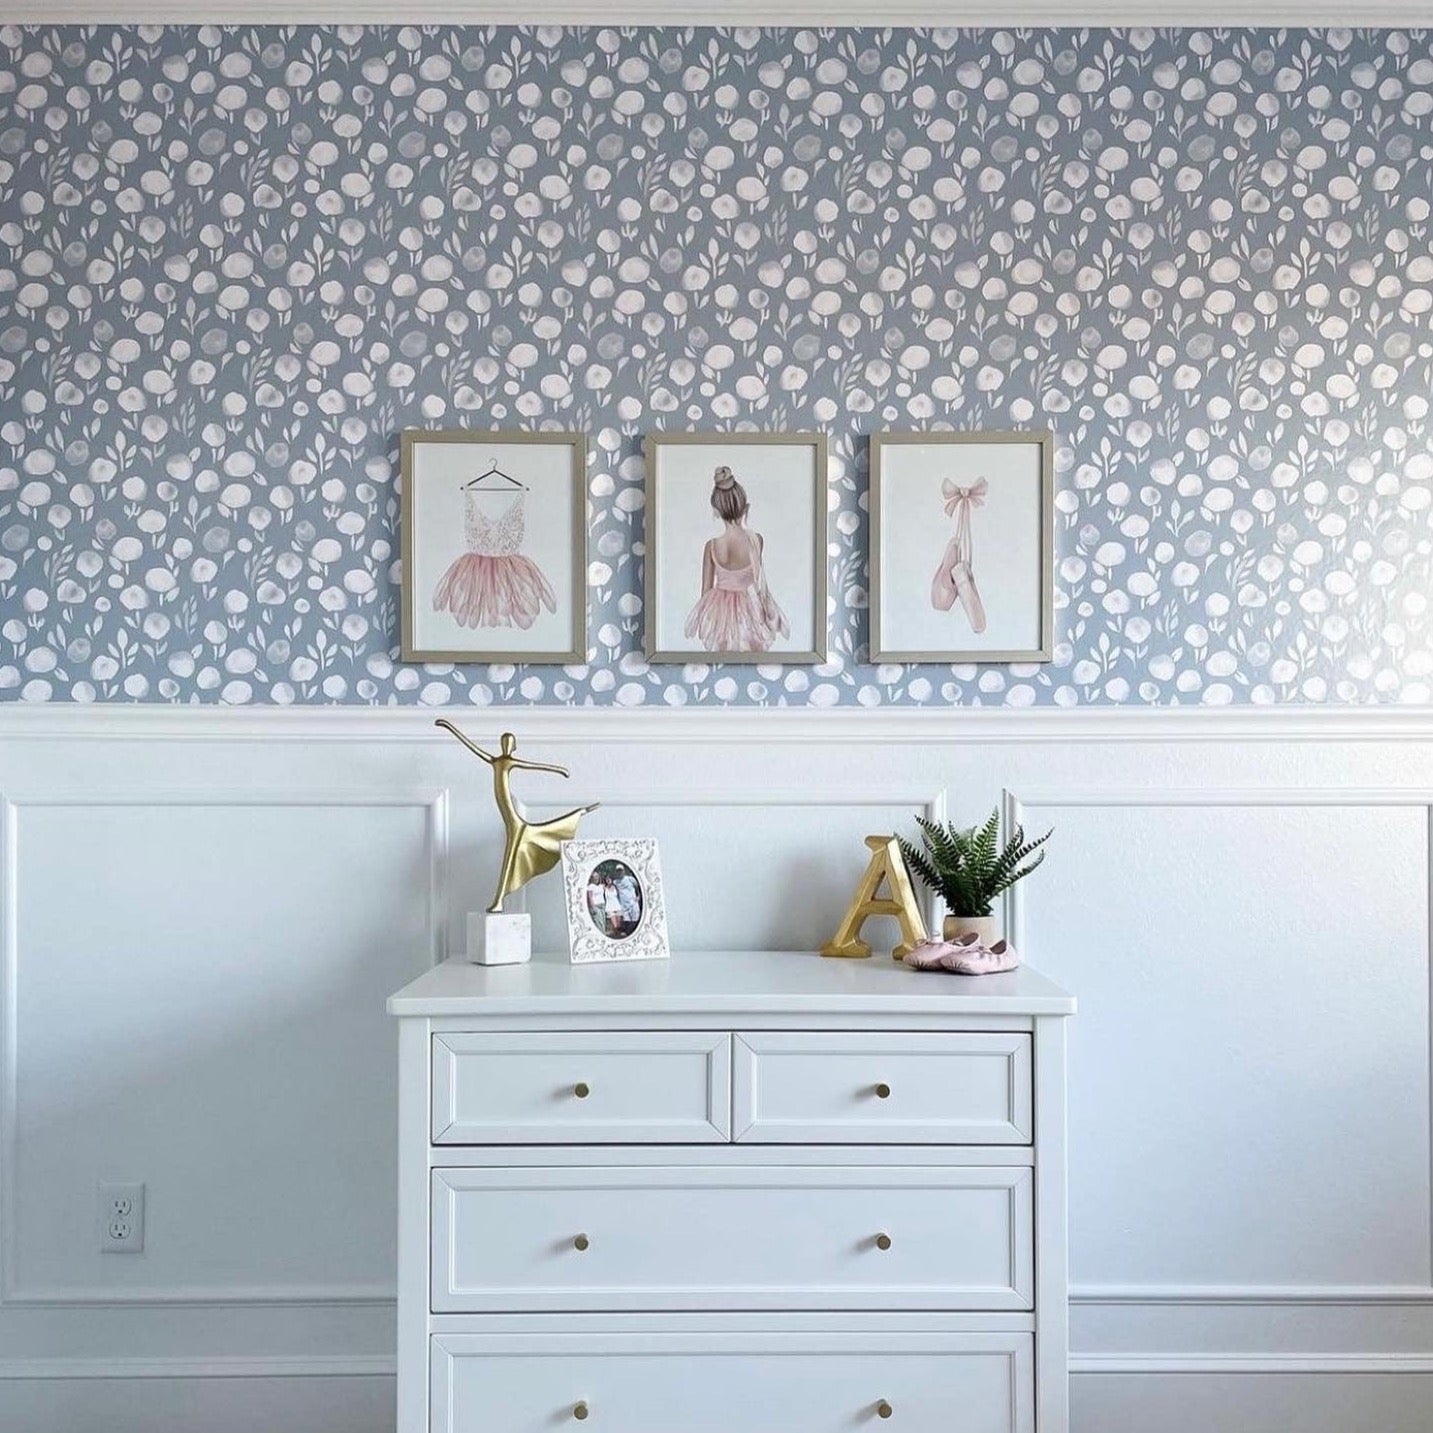 wallpaper, peel and stick wallpaper, Home decor, subtle botanica wallpaper, floral wallpaper, white wallpaper, bedroom wallpapers,